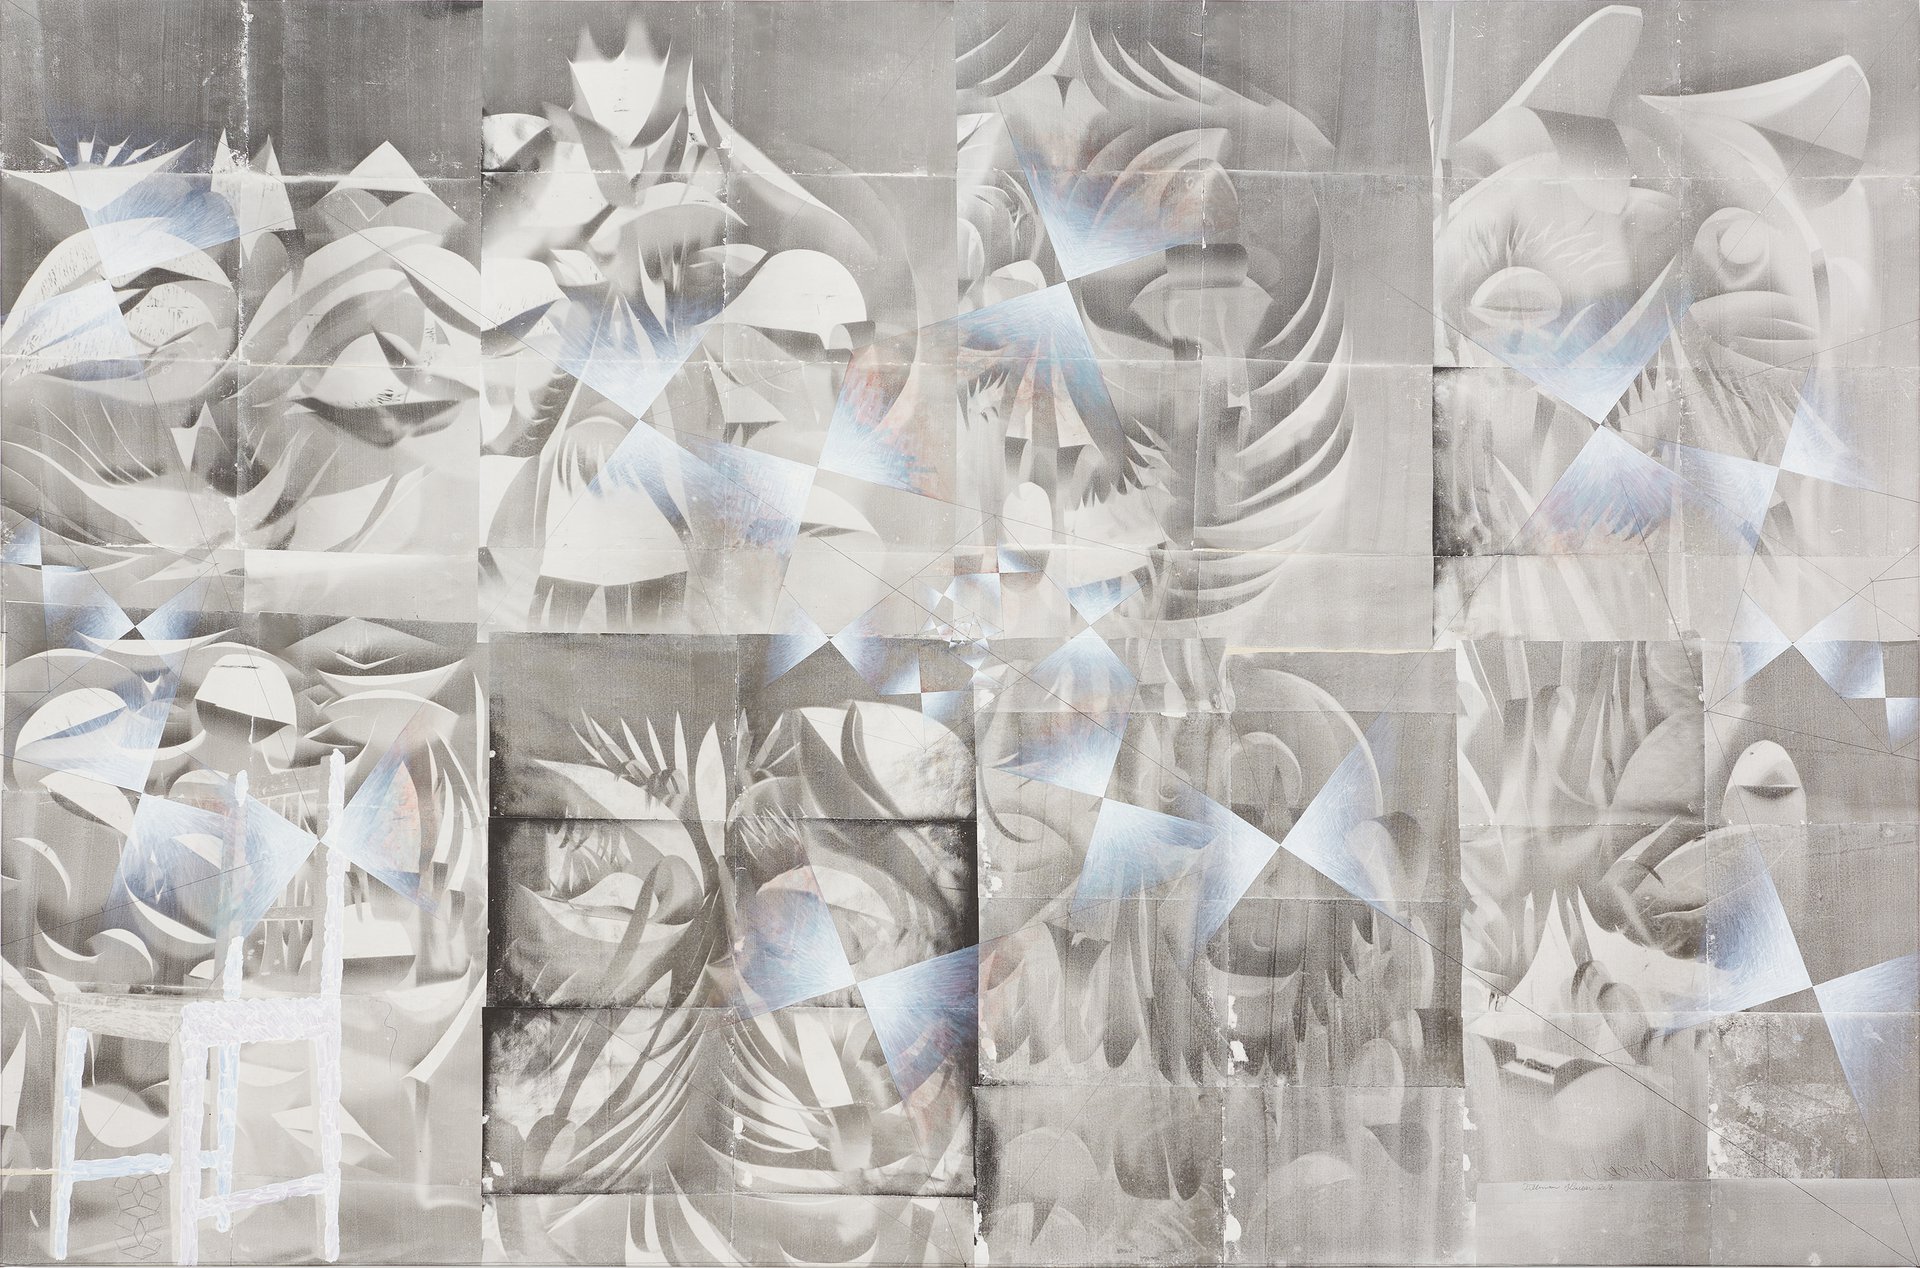 Tillman KaiserMore Blood, 2018Photogram and egg tempera on paper on canvas200 x 300 cm